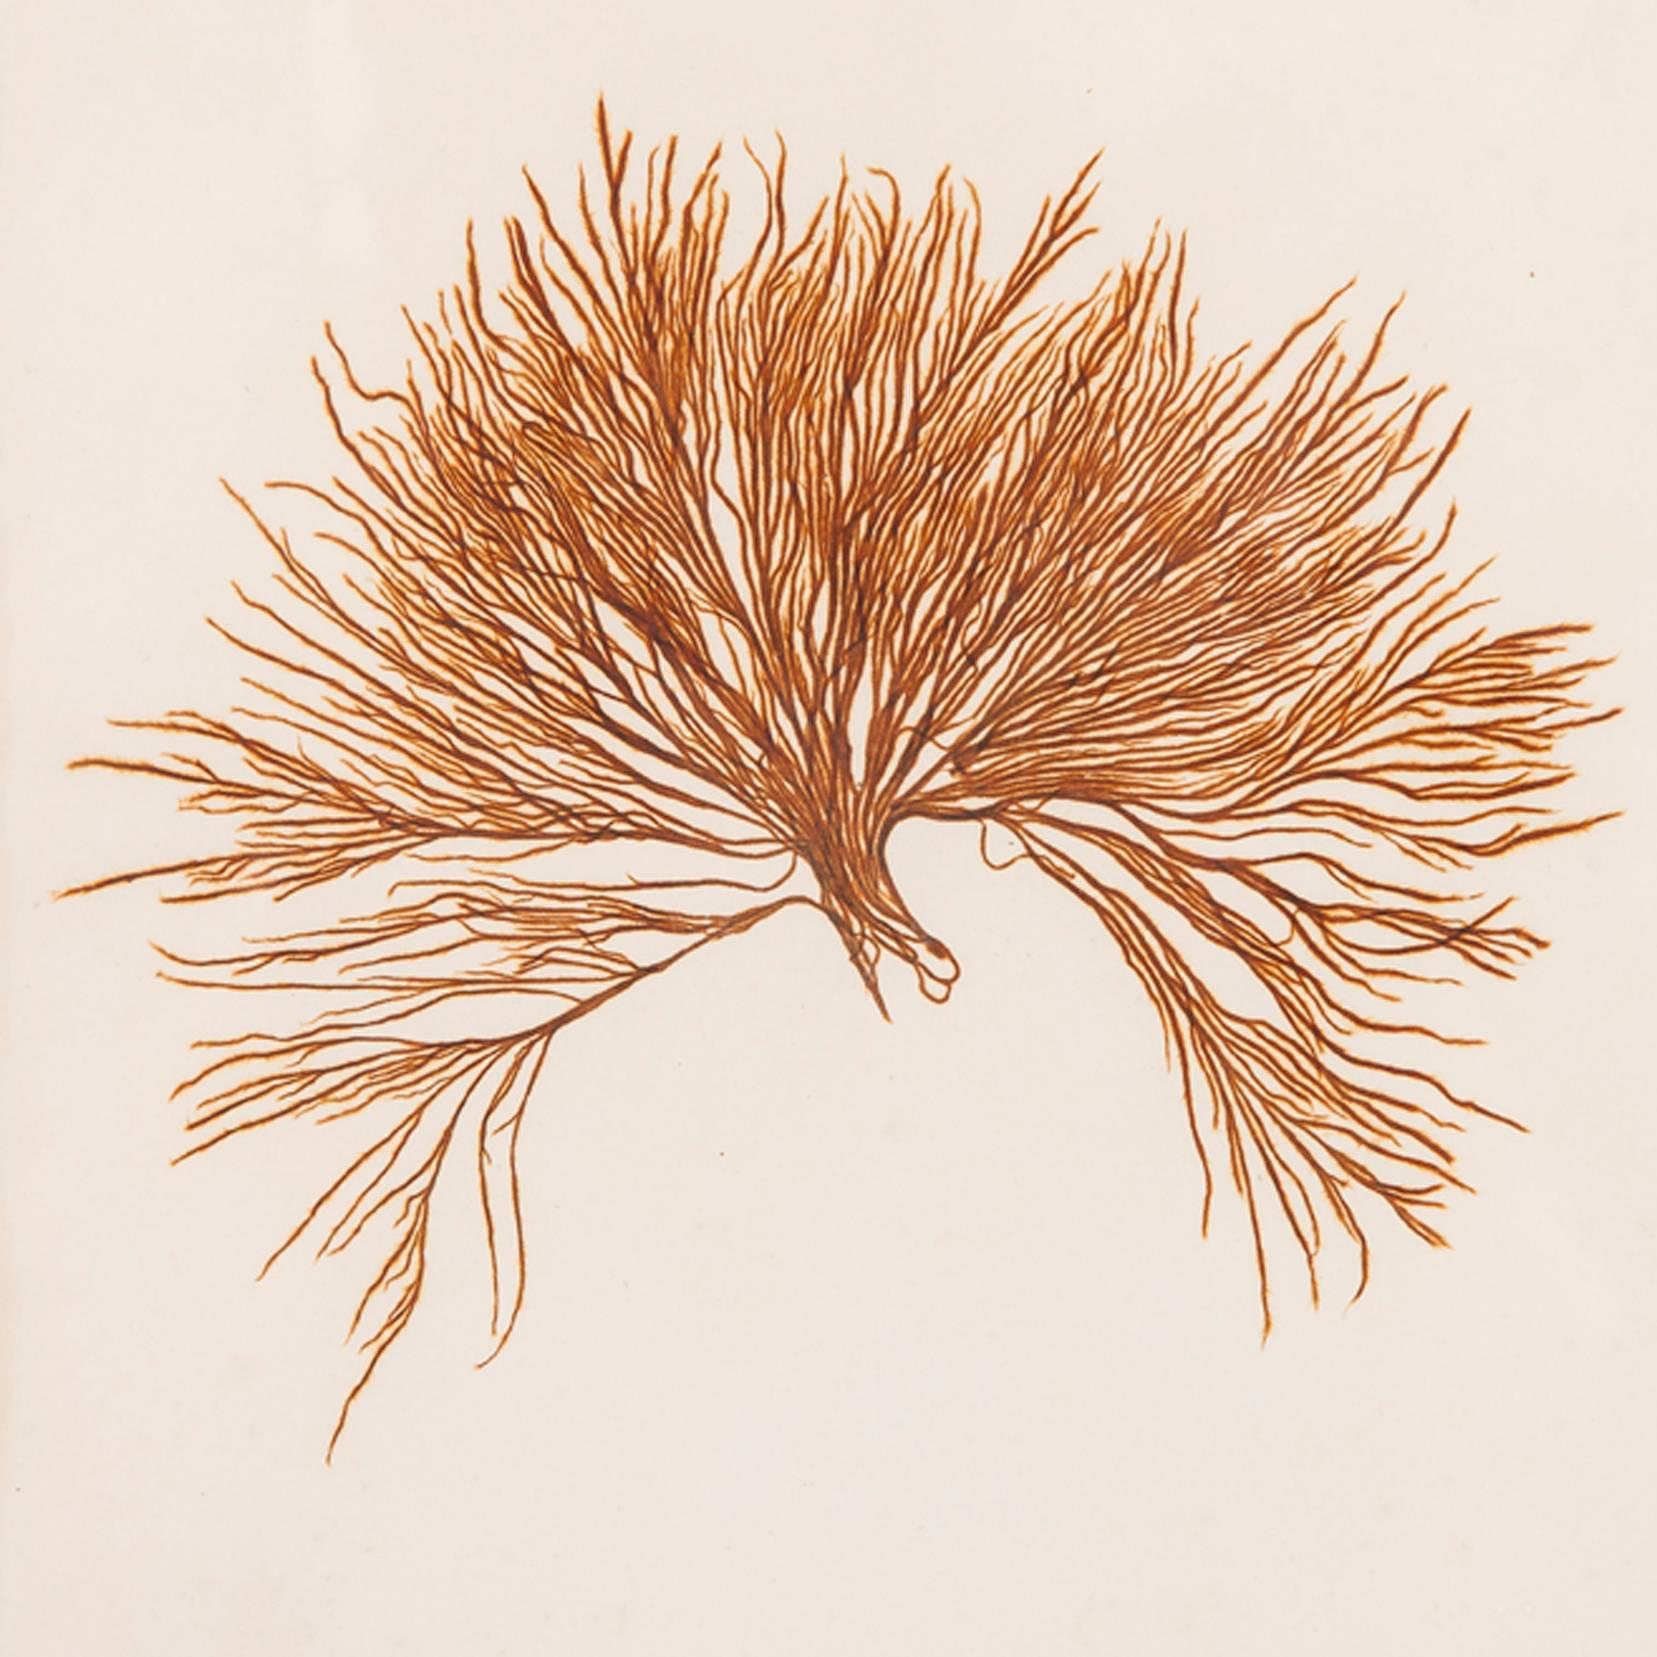 Ectocarpus Tomentosus – original pressed seaweed from 1865.

55W x 59H x 2D cm

Good antique condition considering the age